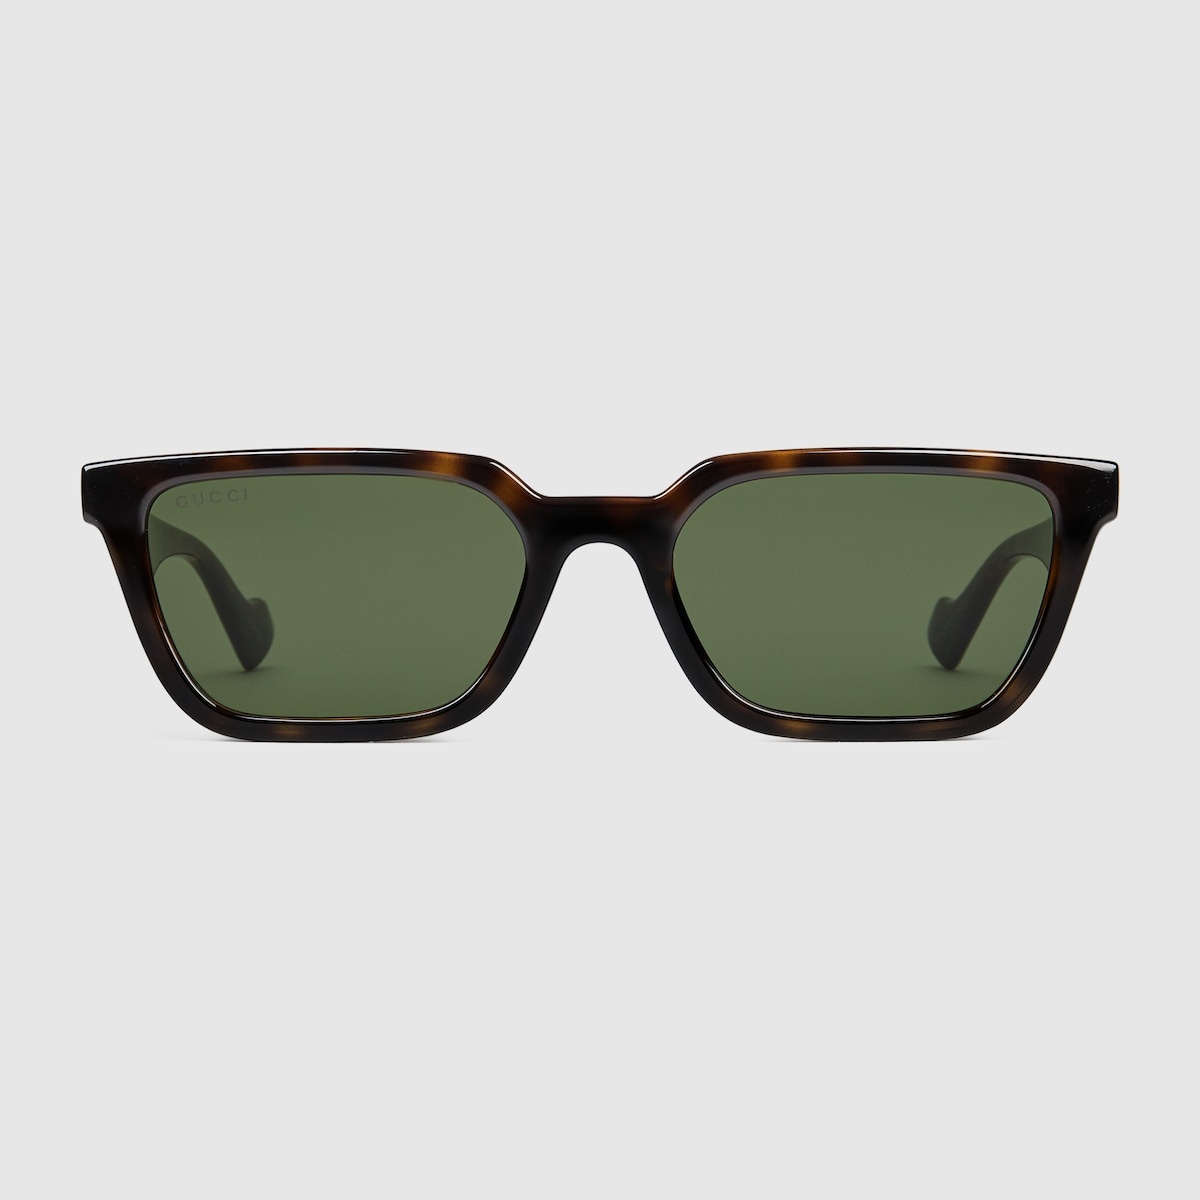 Cat-eye shaped frame sunglasses - 1